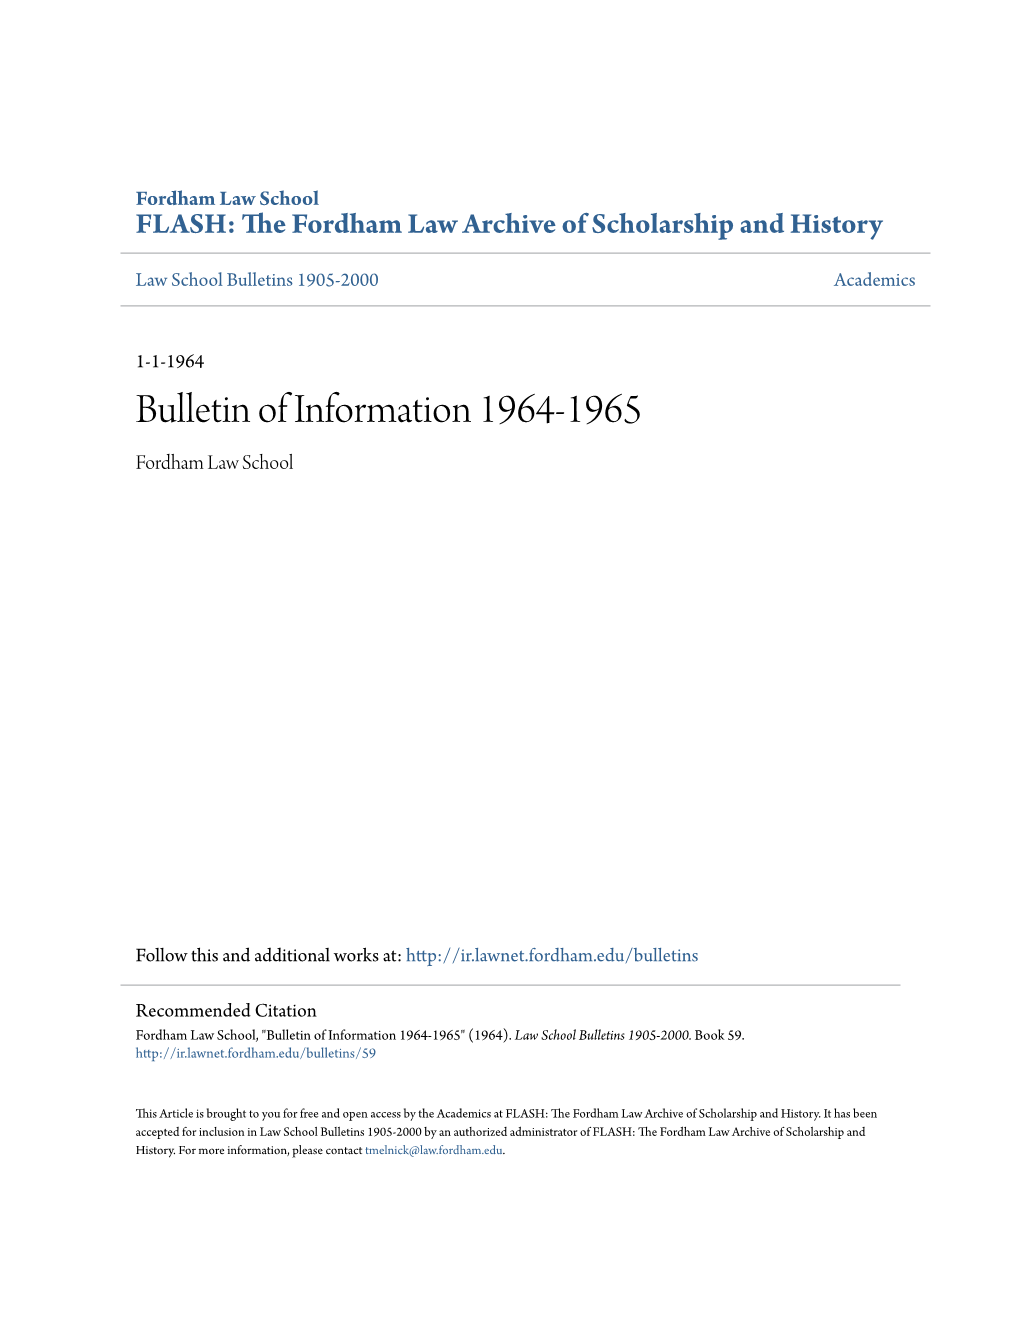 Bulletin of Information 1964-1965 Fordham Law School